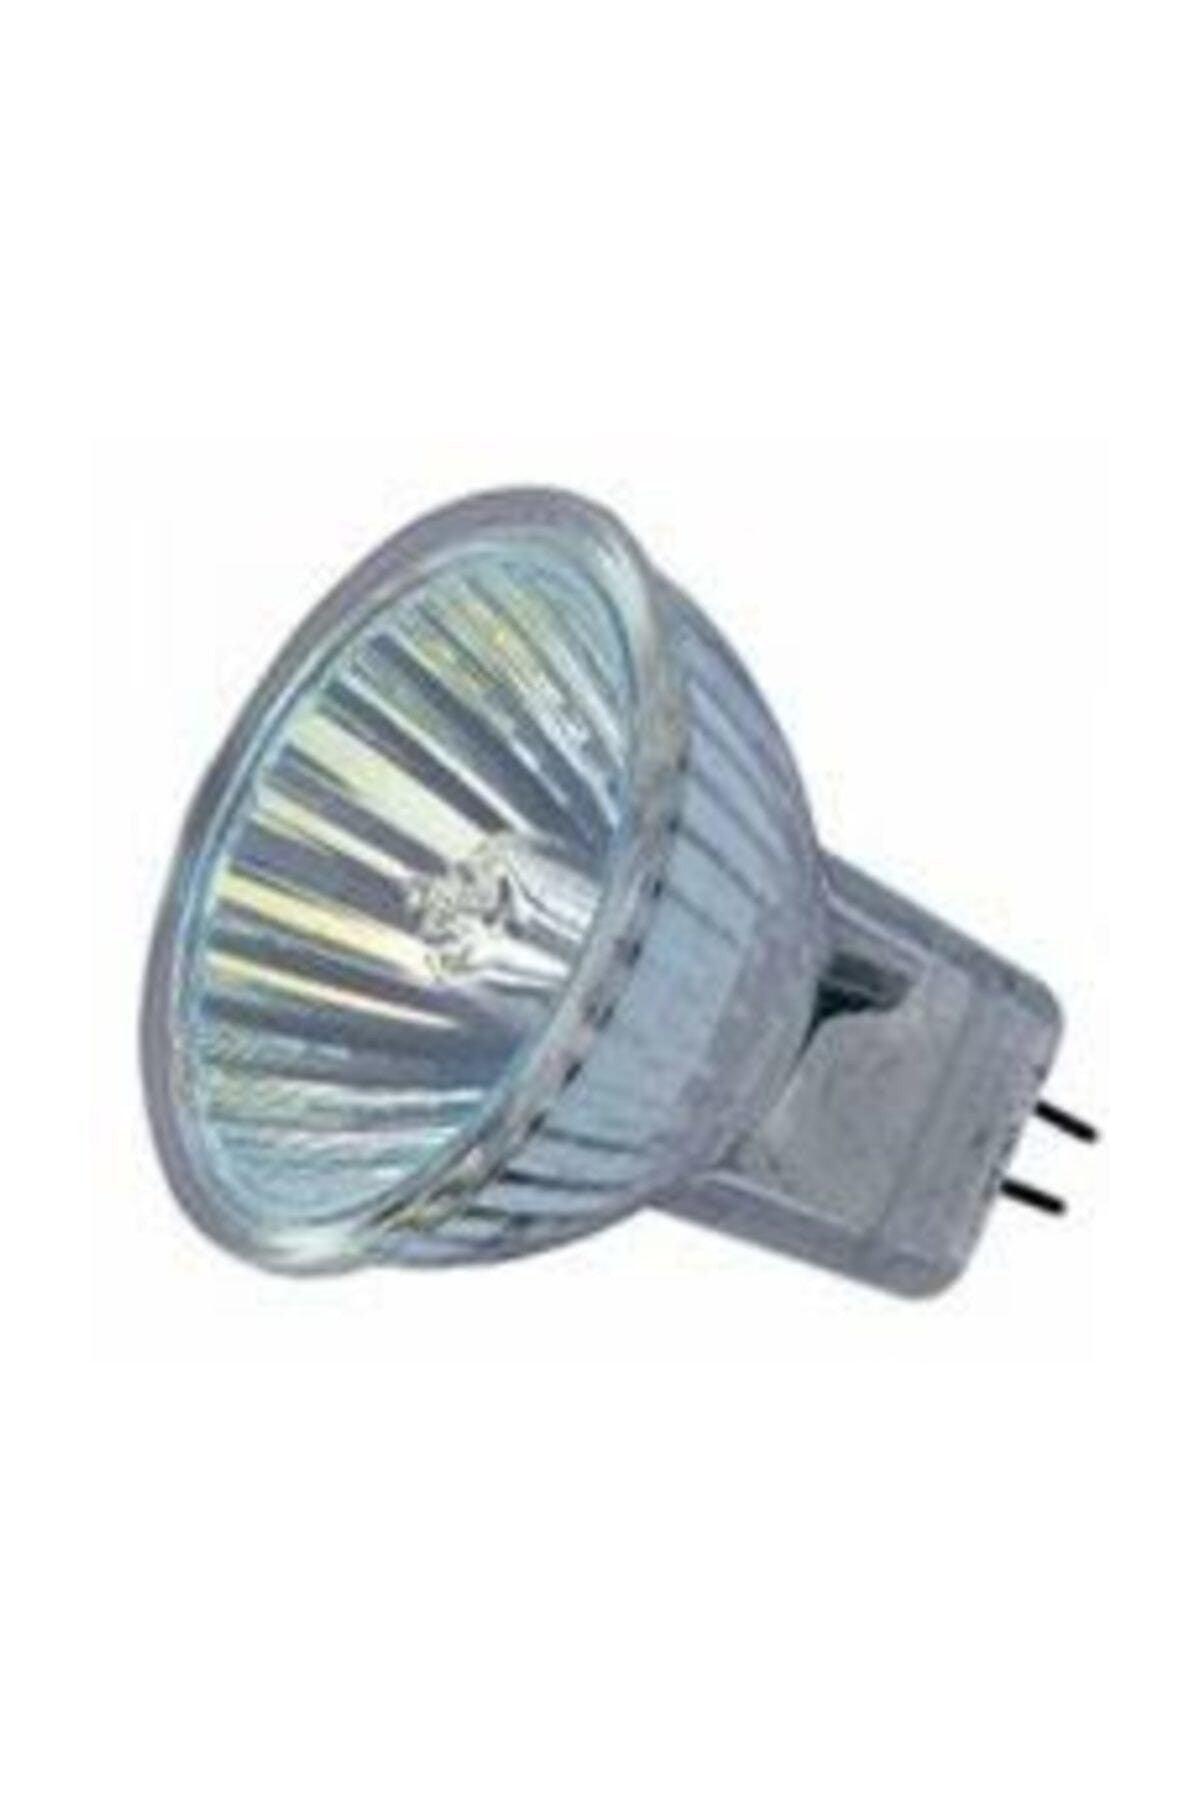 10 Pcs 12v 35w Mr11 Small Dish Halogen Lamp